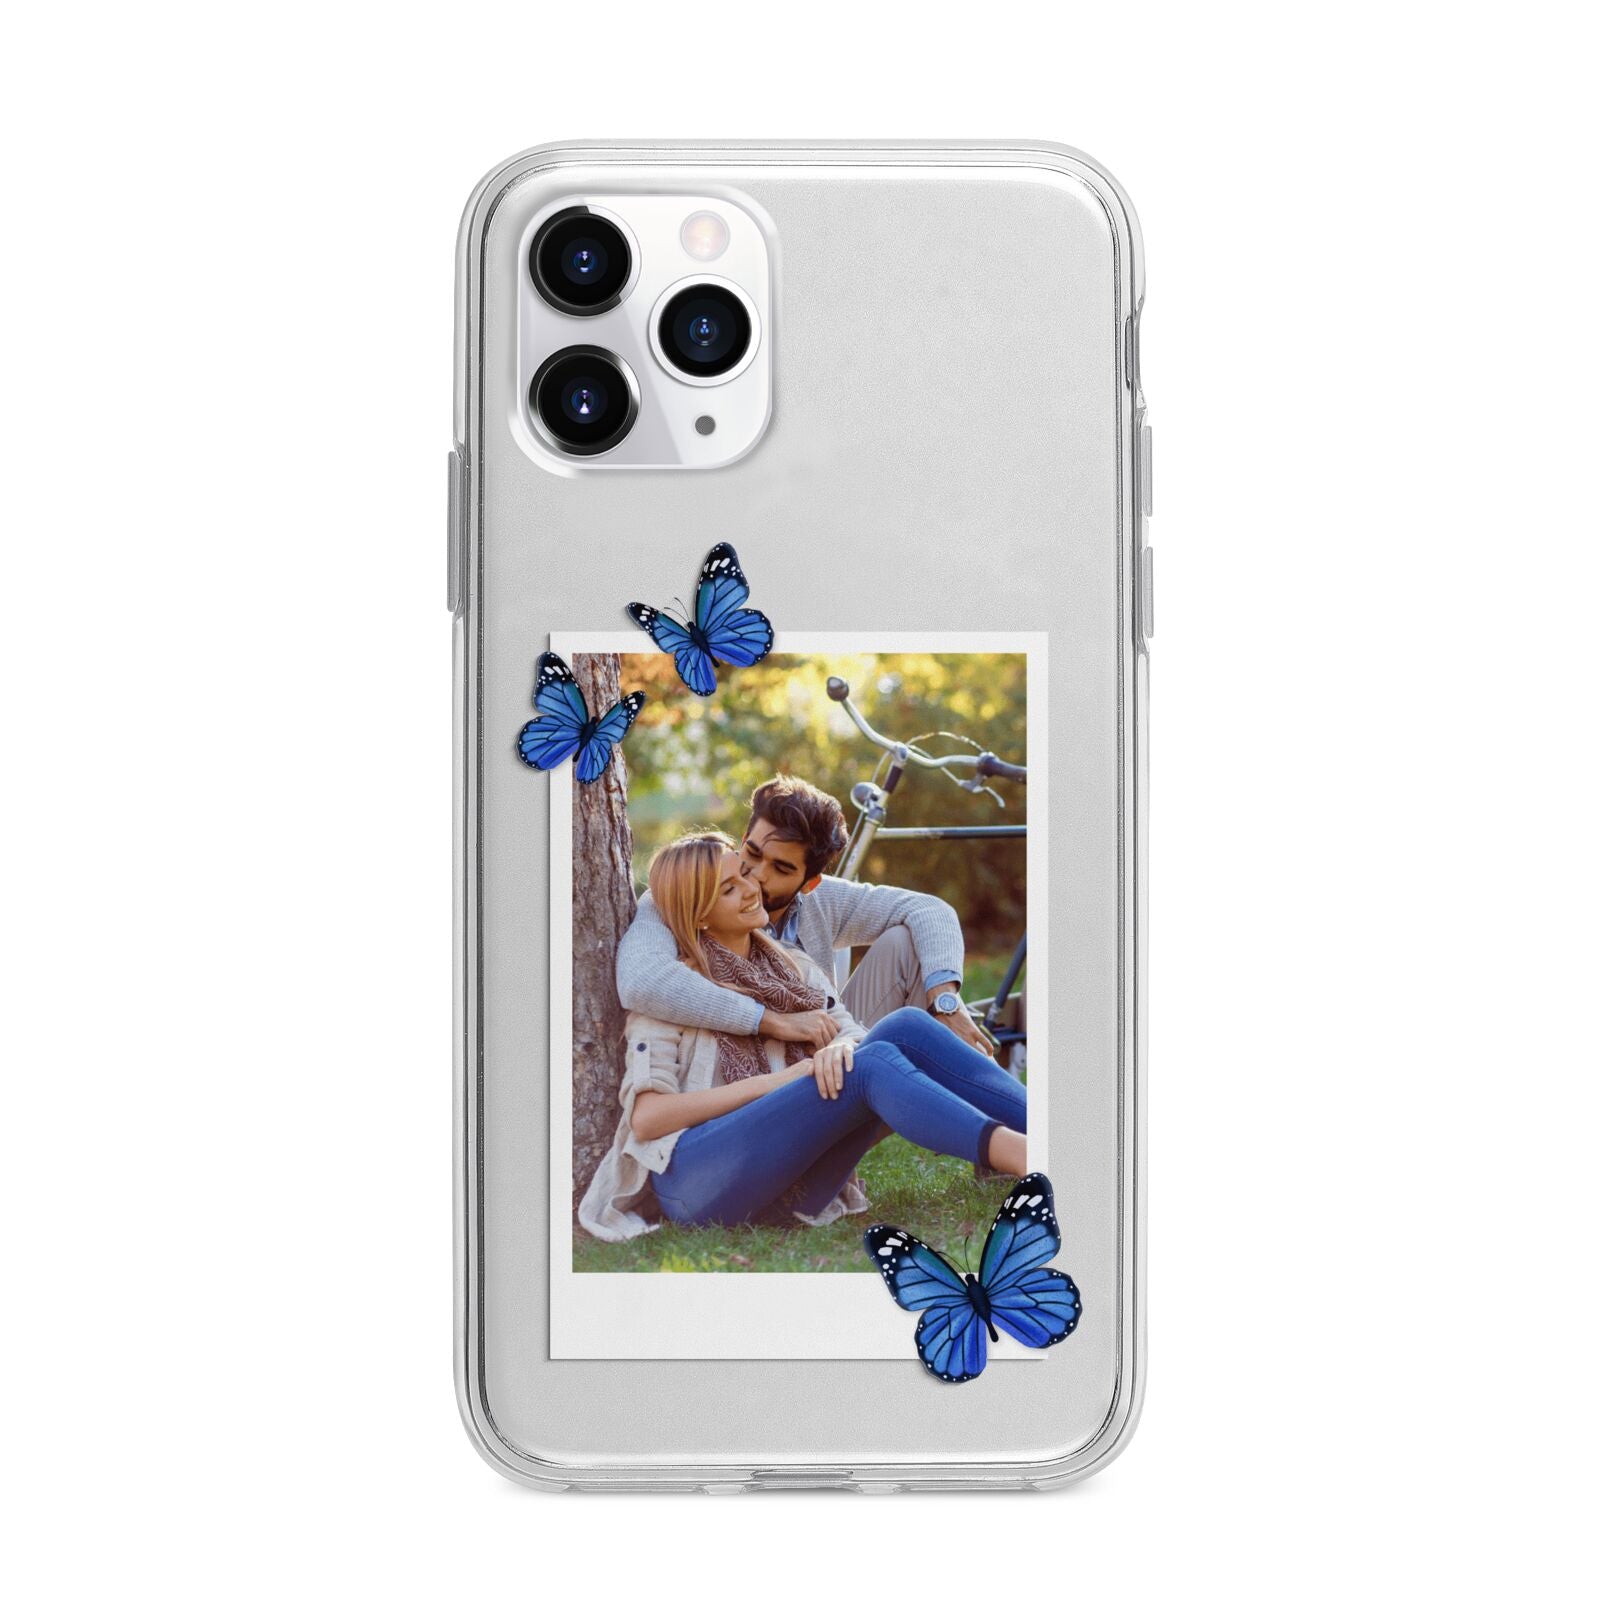 Polaroid Photo Apple iPhone 11 Pro Max in Silver with Bumper Case